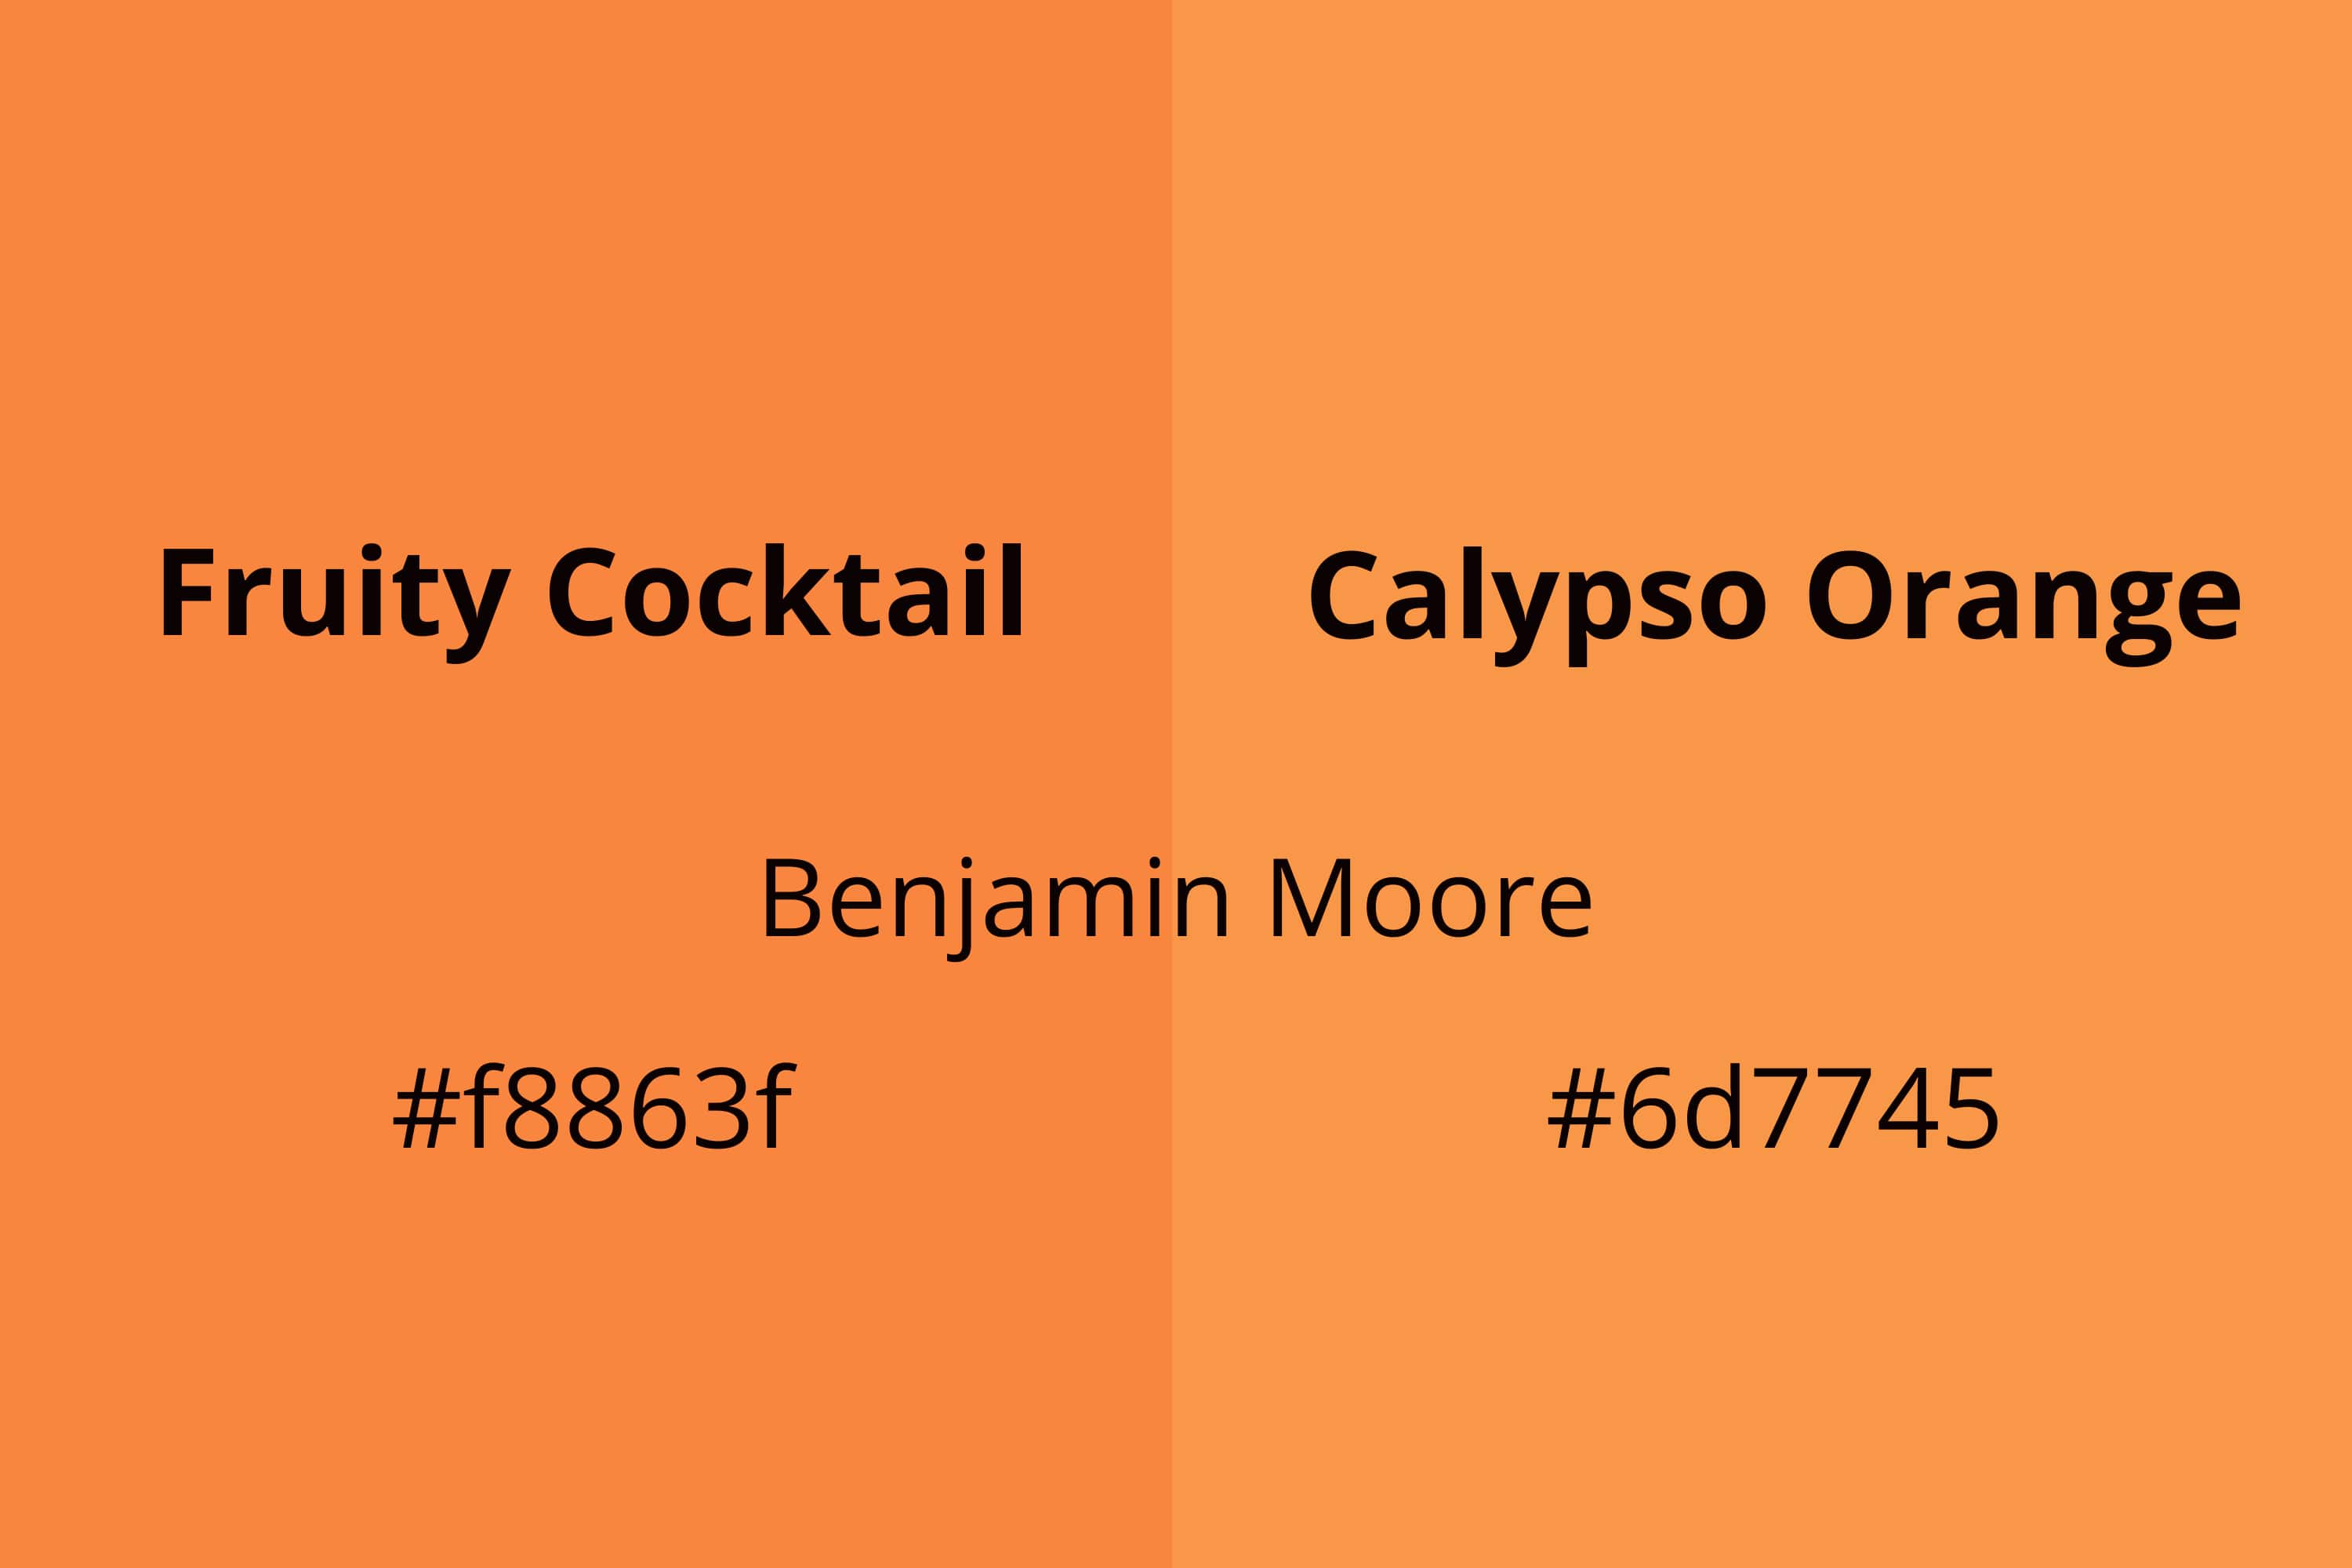 Fruity Cocktail and Calypso Orange By Benjamin Moore